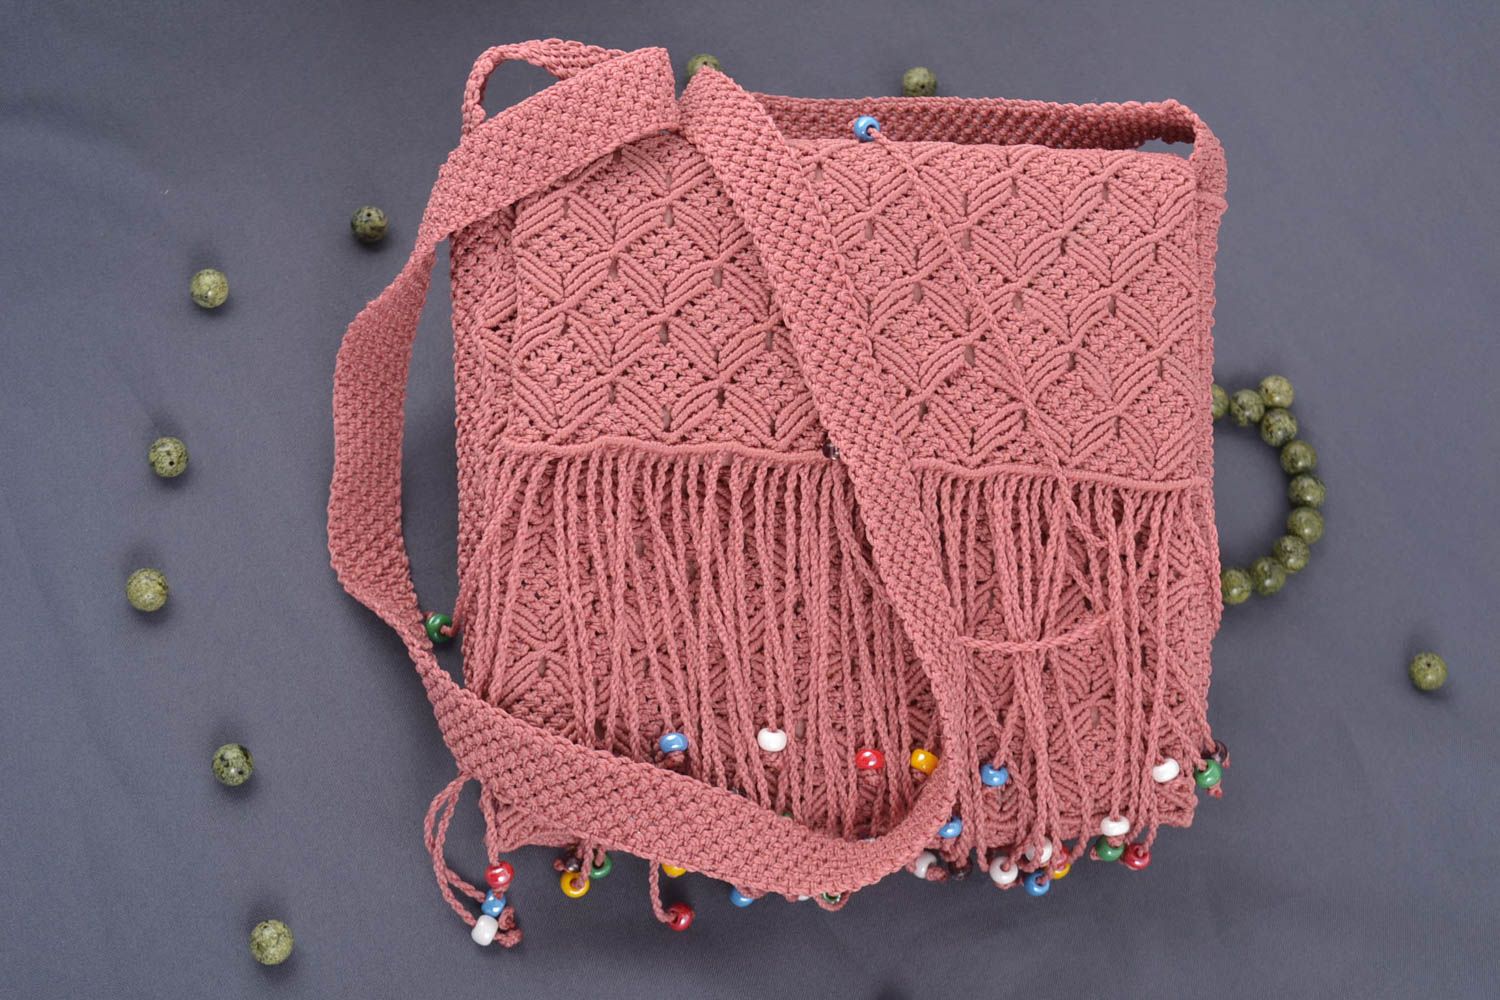 Buy R.R.LALA Macramé handbag with knotted handle Macramé shopping bag,  Macramé bag Macrame Bags Design Handbag Designs Purse macrame hand bag full  Natural color at Amazon.in